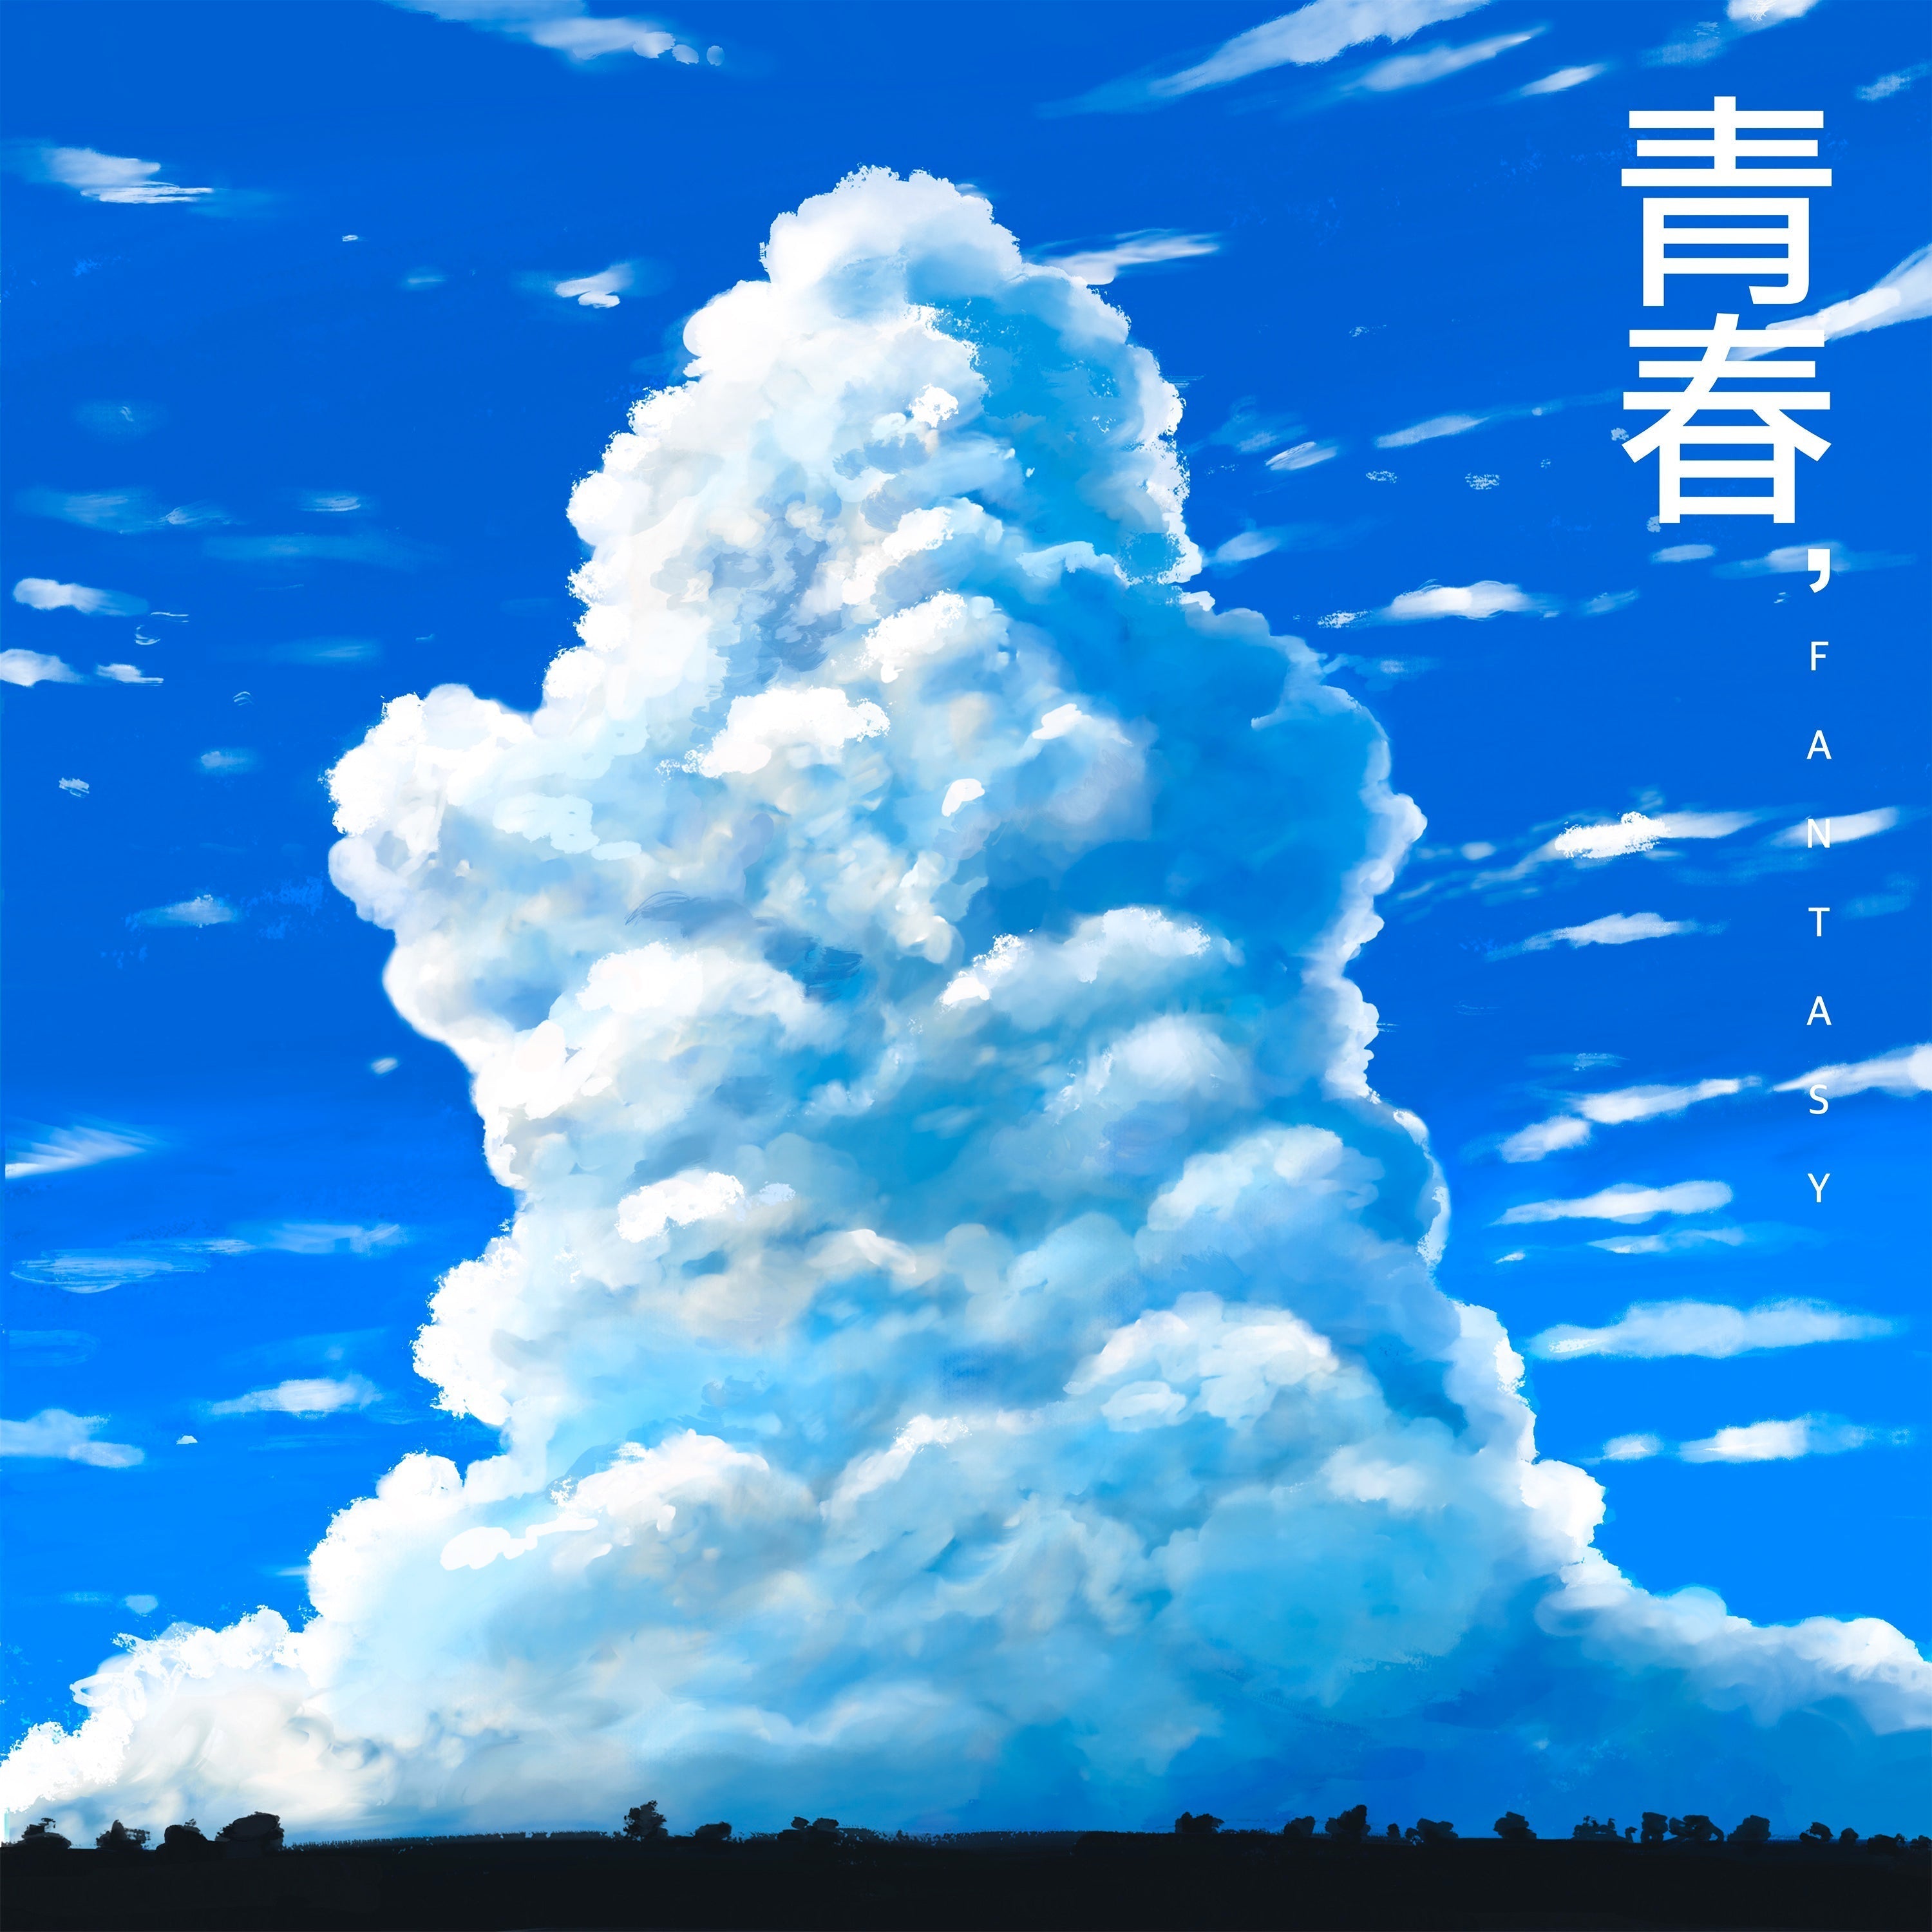 GIFT - EP [靑春, Fantasy] - KPOPHERO